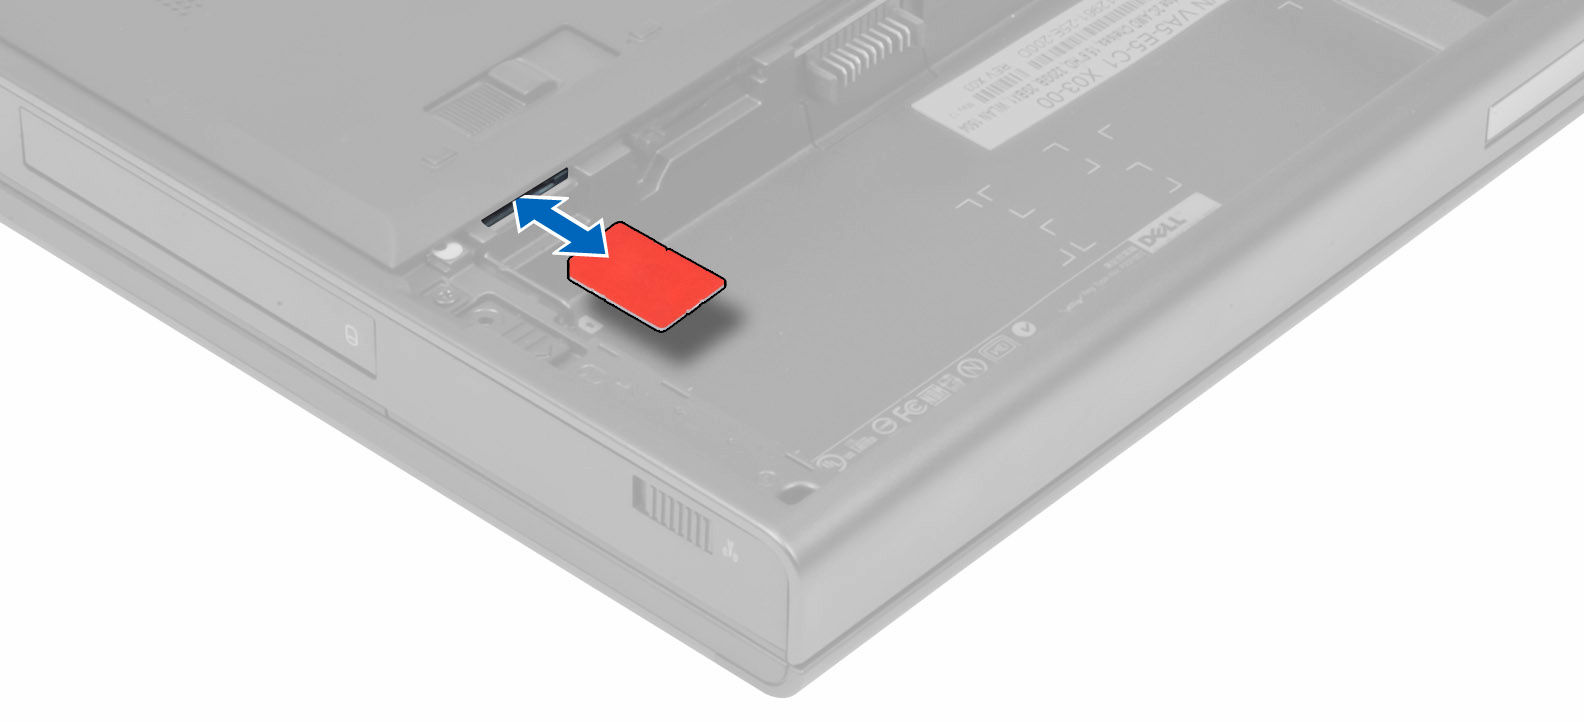 Sådan installeres Micro Subscriber Identity Module (SIM)- kortet 1. Skub micro SIM-kortet ind i dets åbning. 2. Installer batteriet. 3.